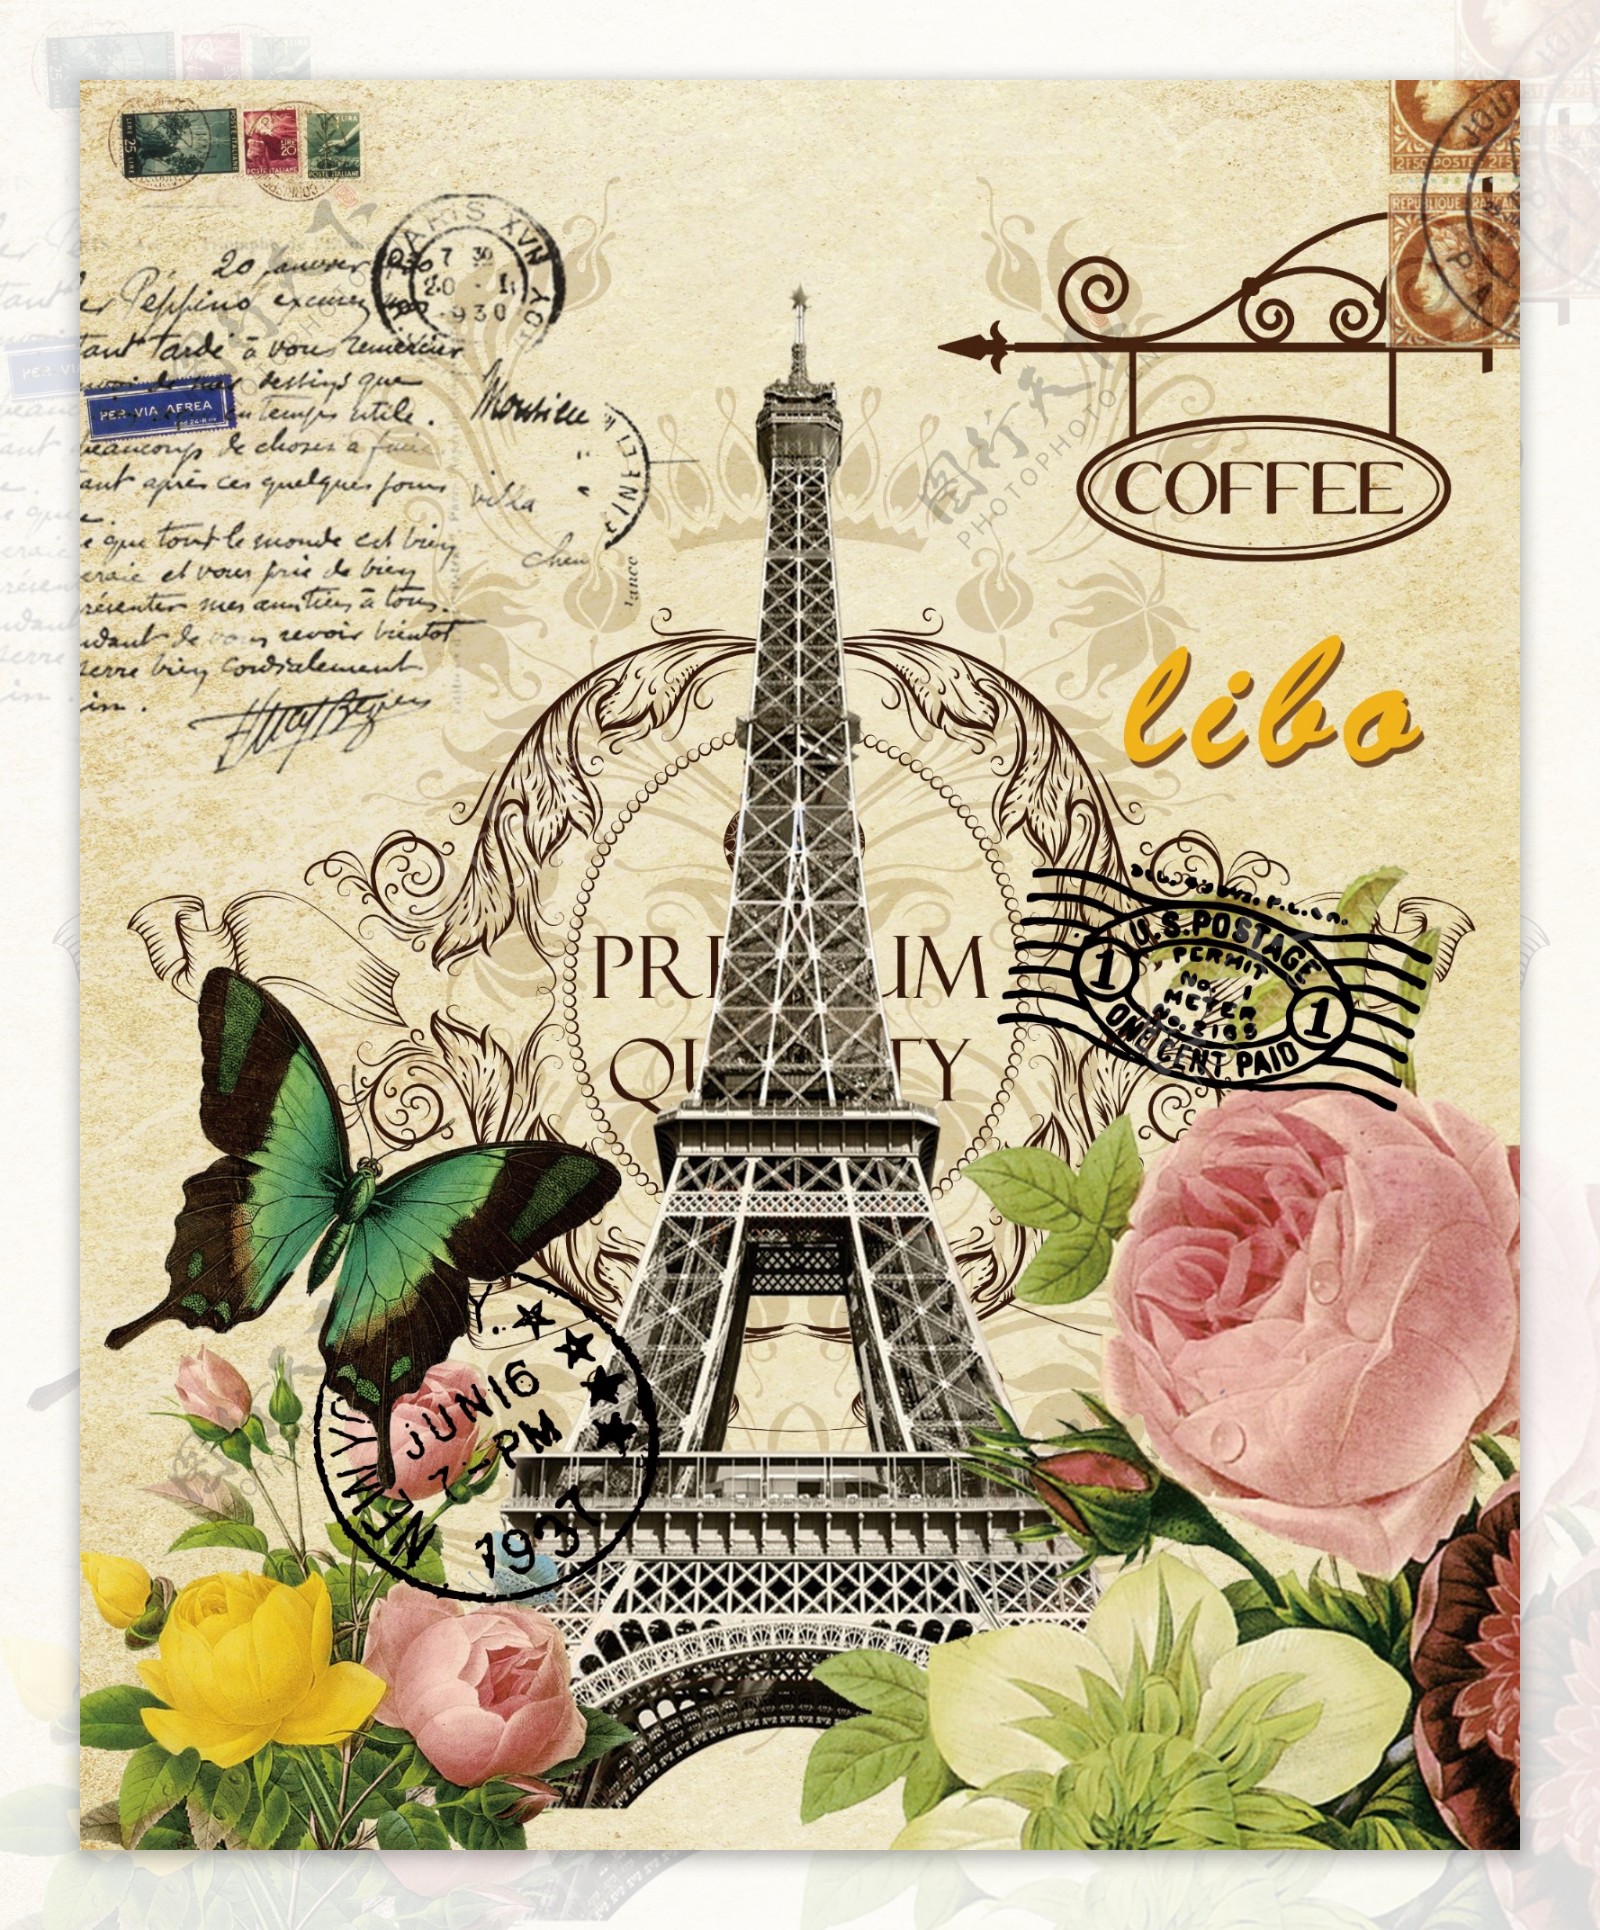 JUNE 2014 巴黎 石门和铁塔|摄影|风光摄影|carl_armen - 原创作品 - 站酷 (ZCOOL)